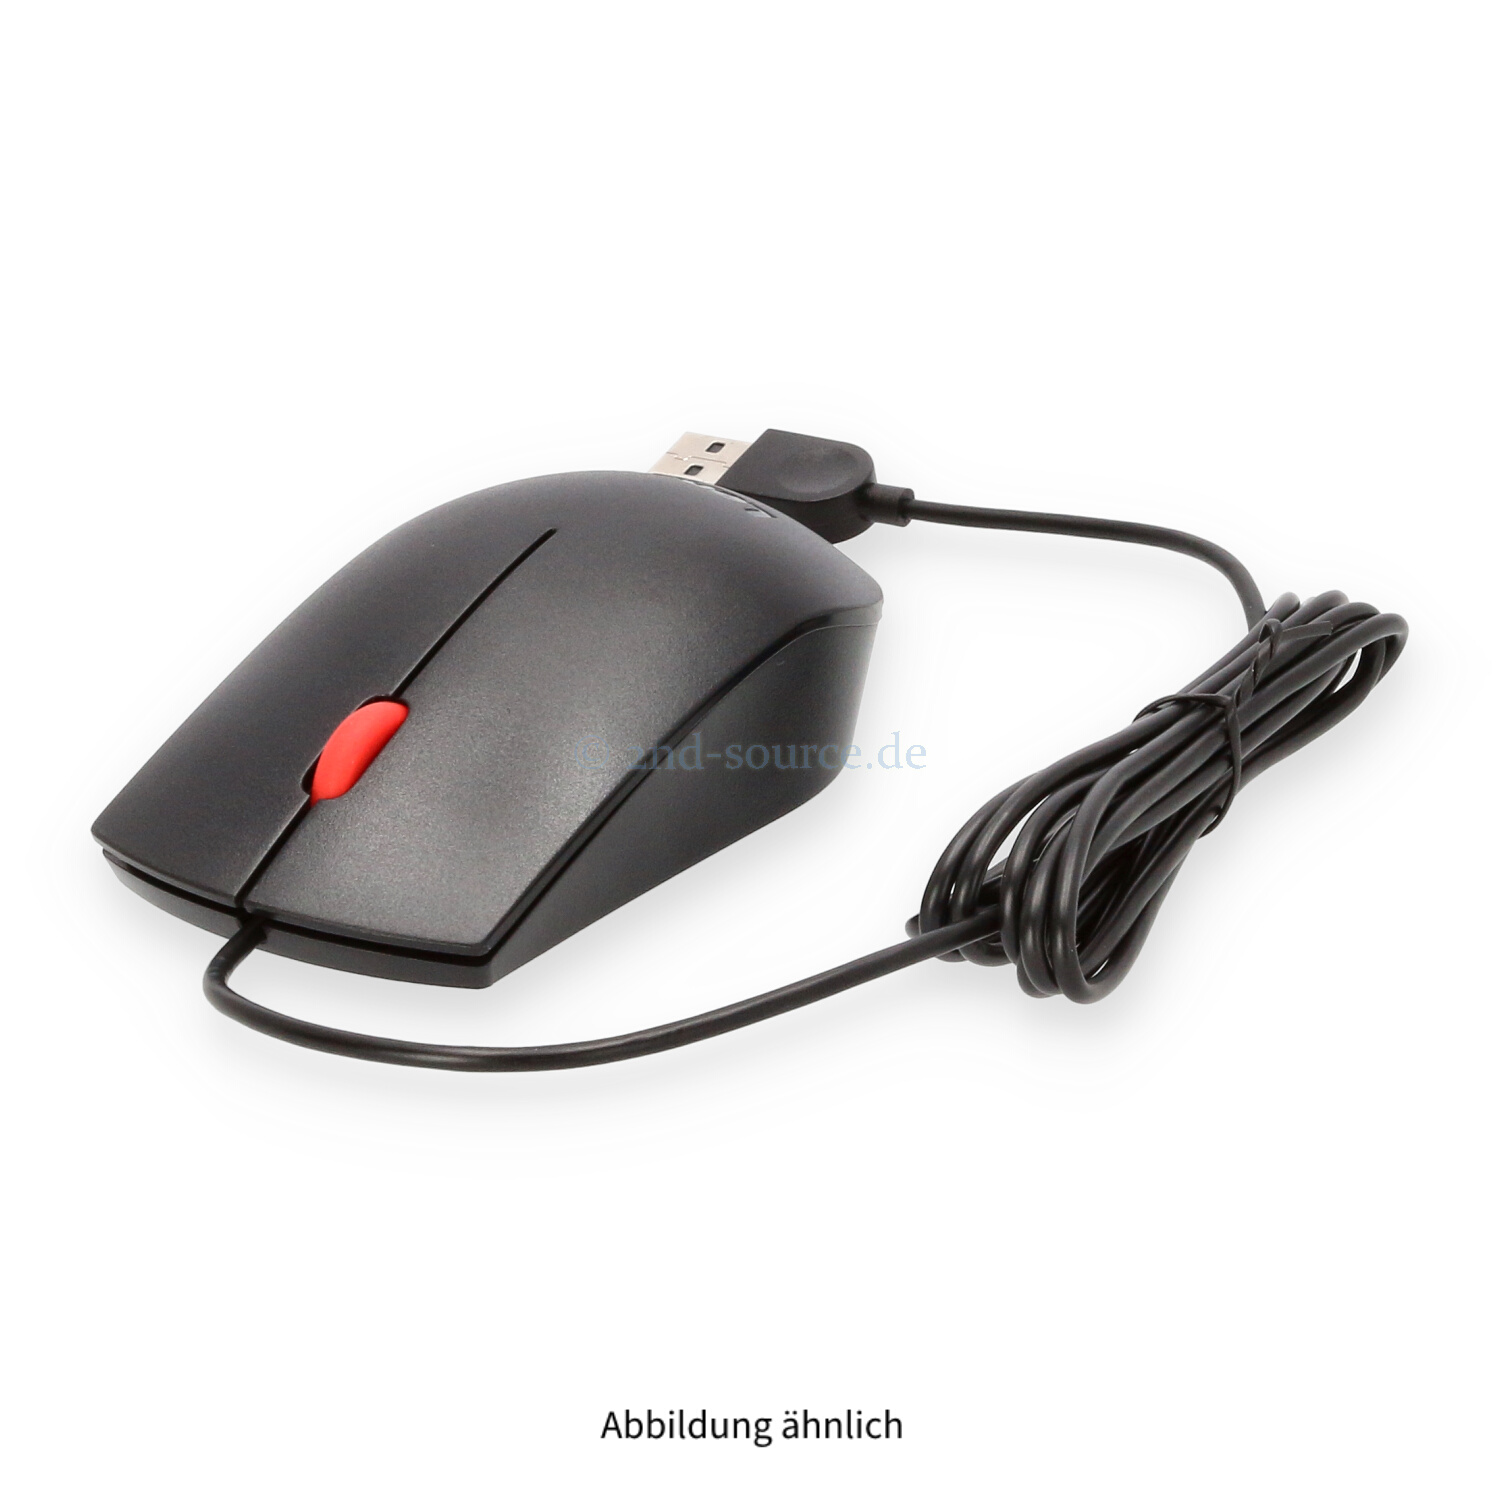 Lenovo Optical USB Mouse 3 Tasten Beidhändig Schwarz 00PH133